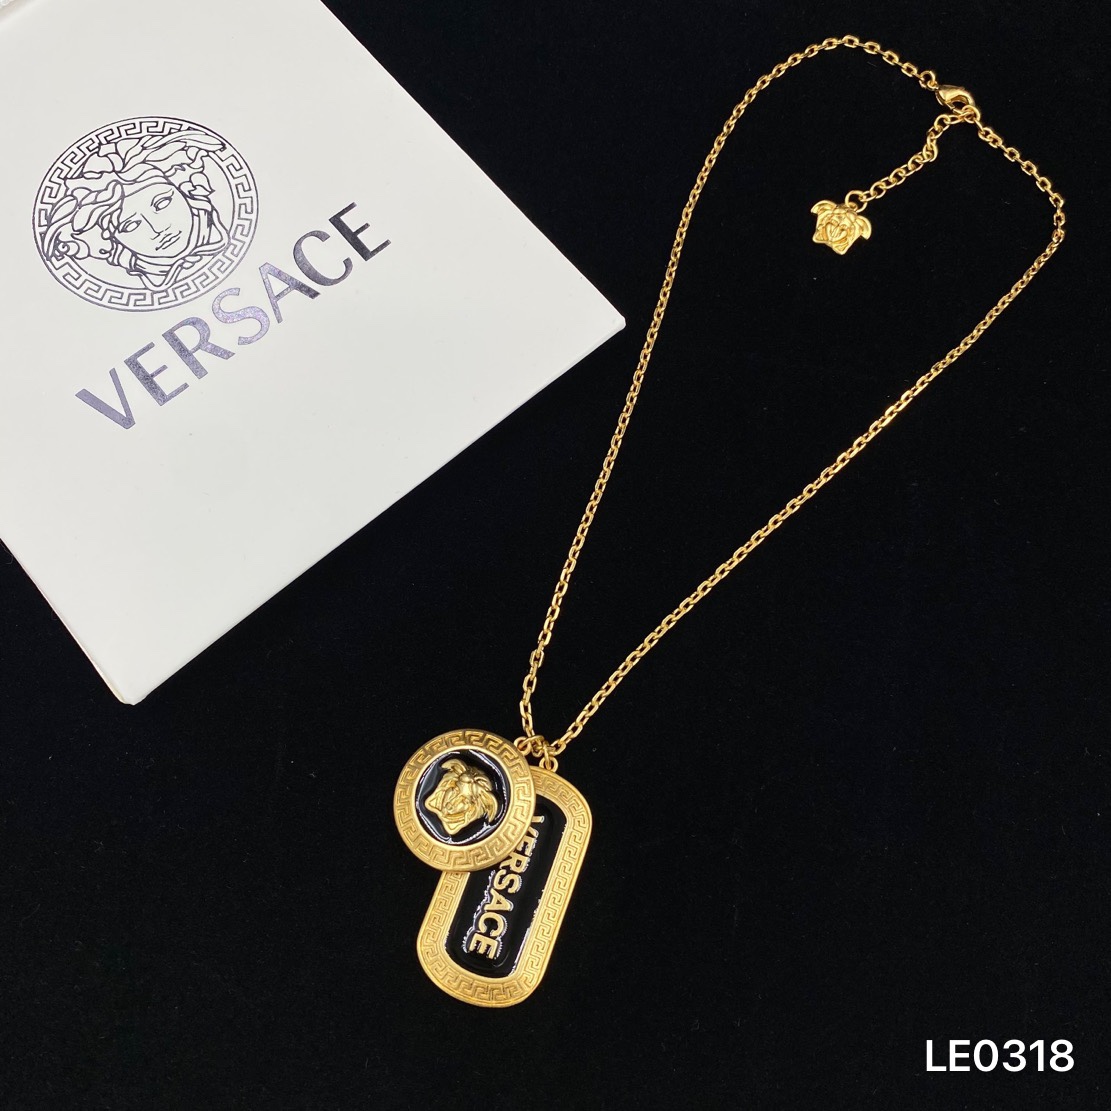 Versace necklace